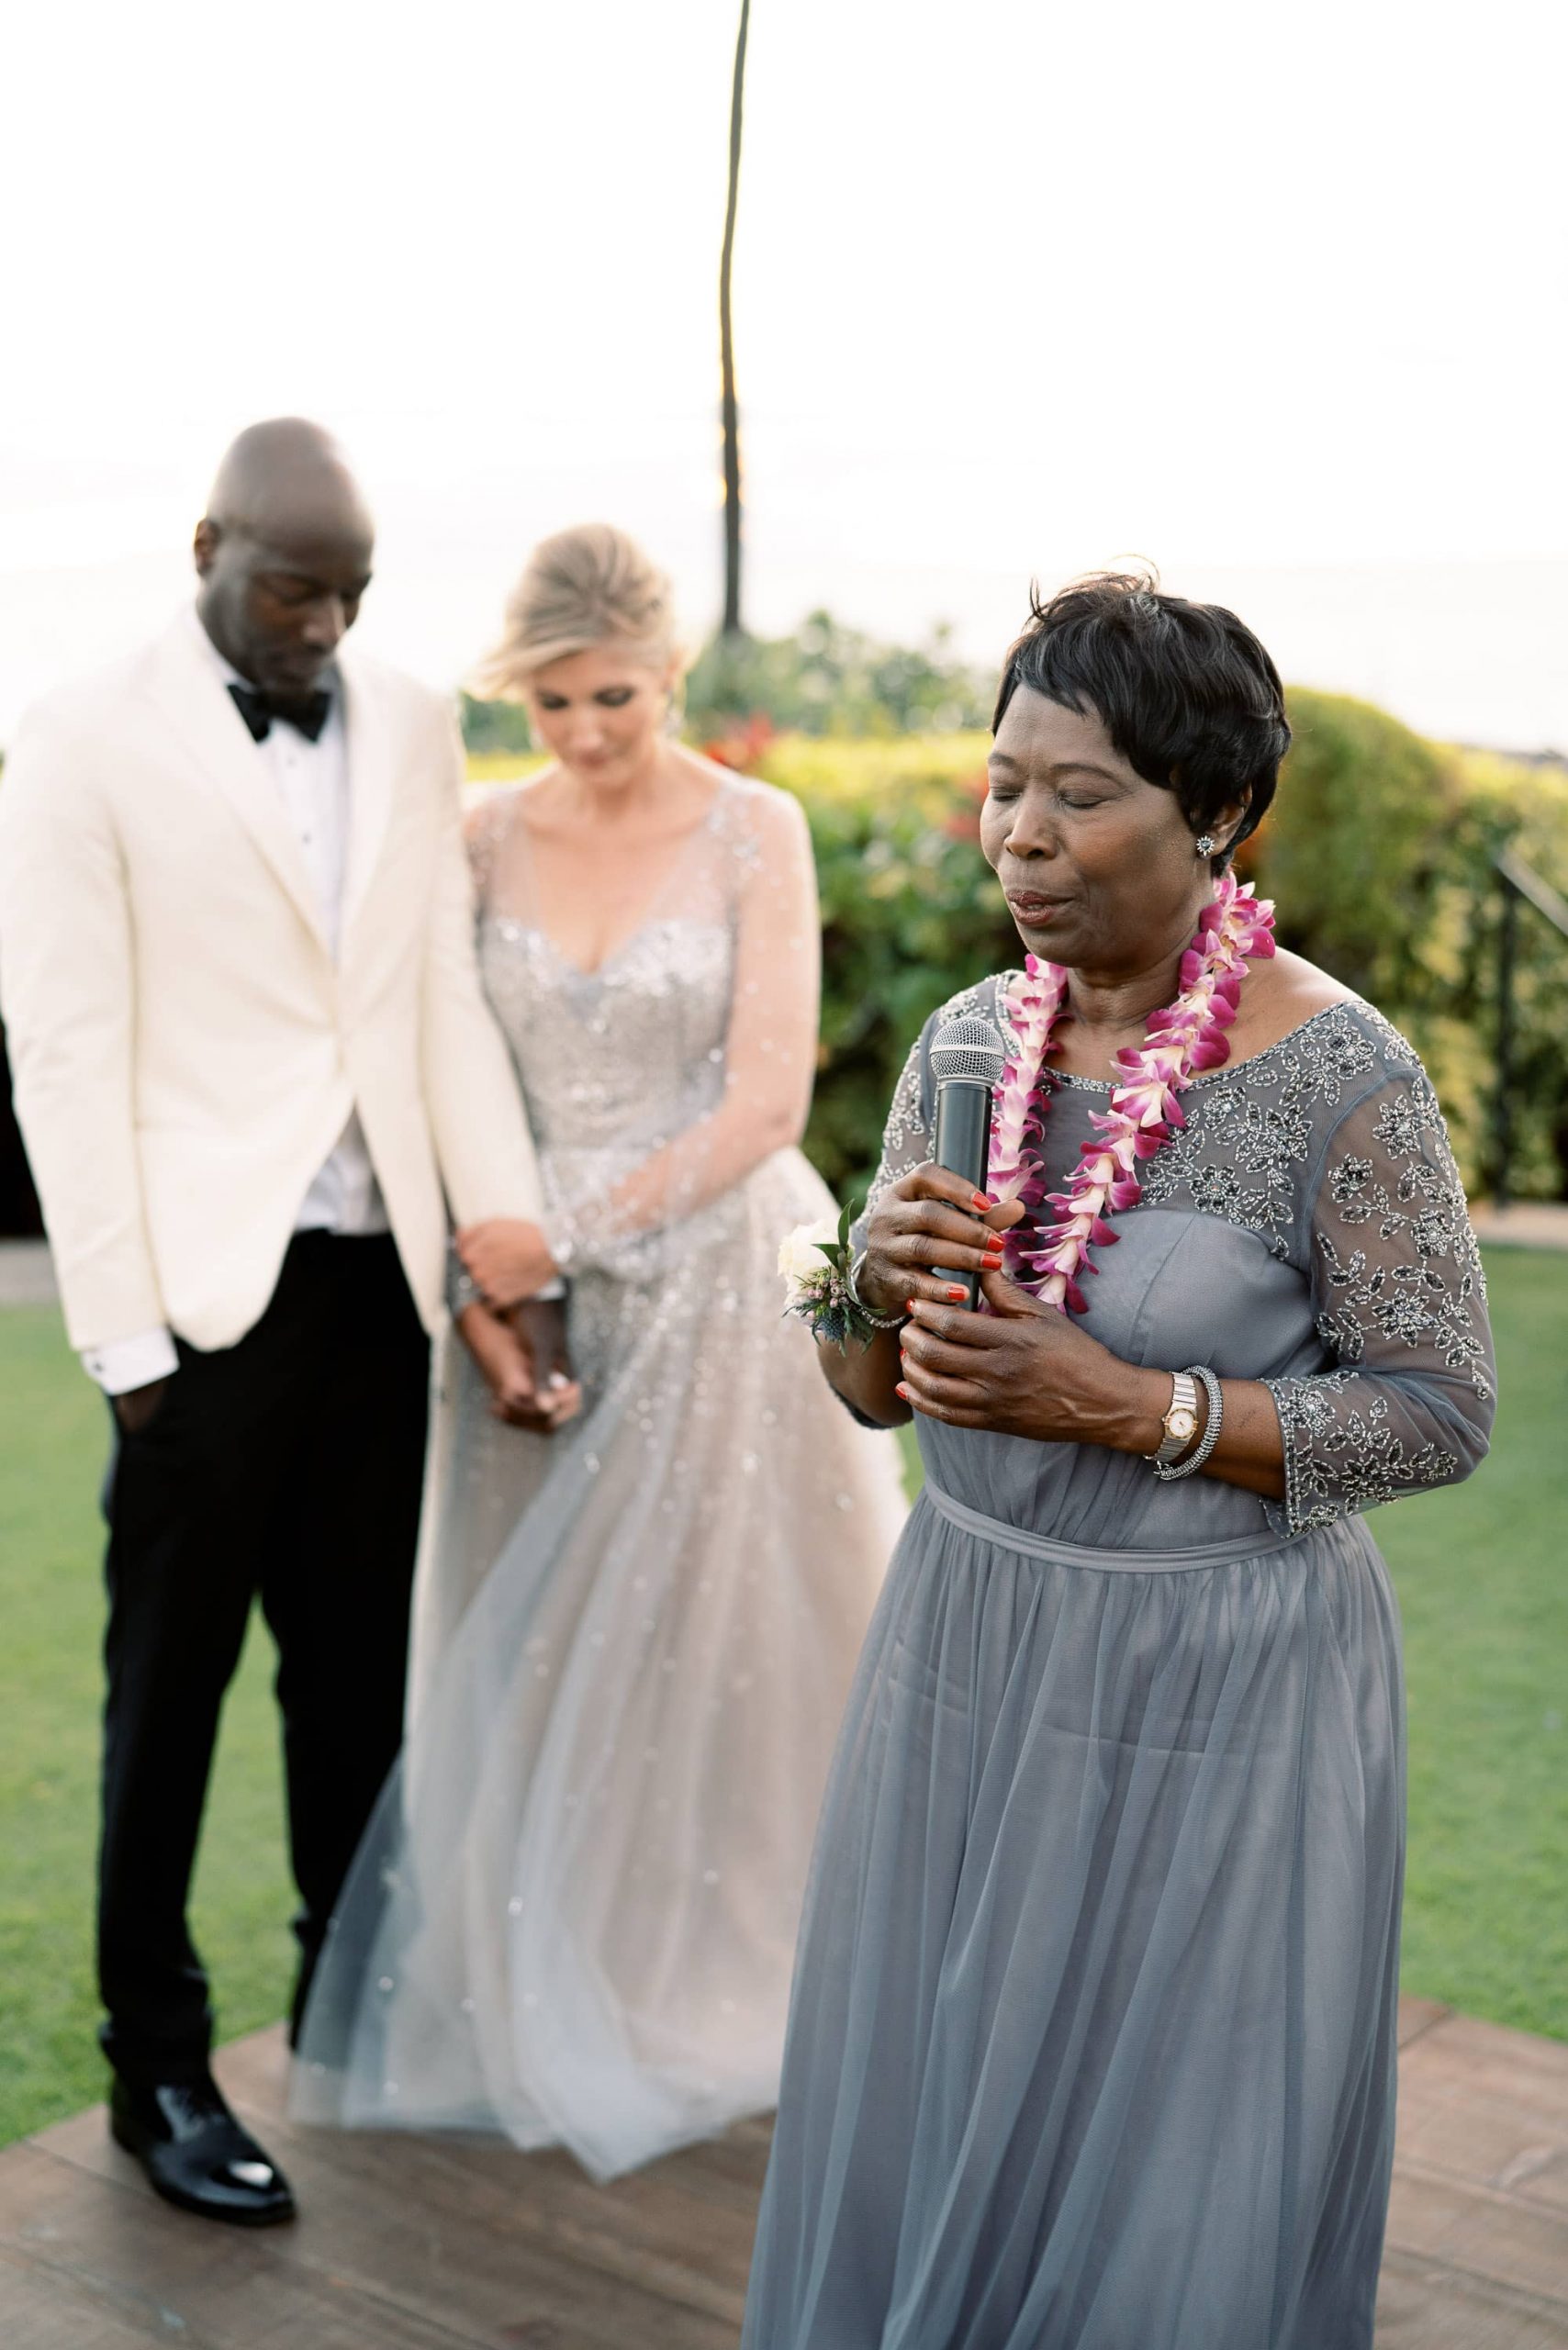 Prayers at reception at Maui wedding at Four Seasons Resort Maui in Wailea, Hawaii | Photo by James x Schulze